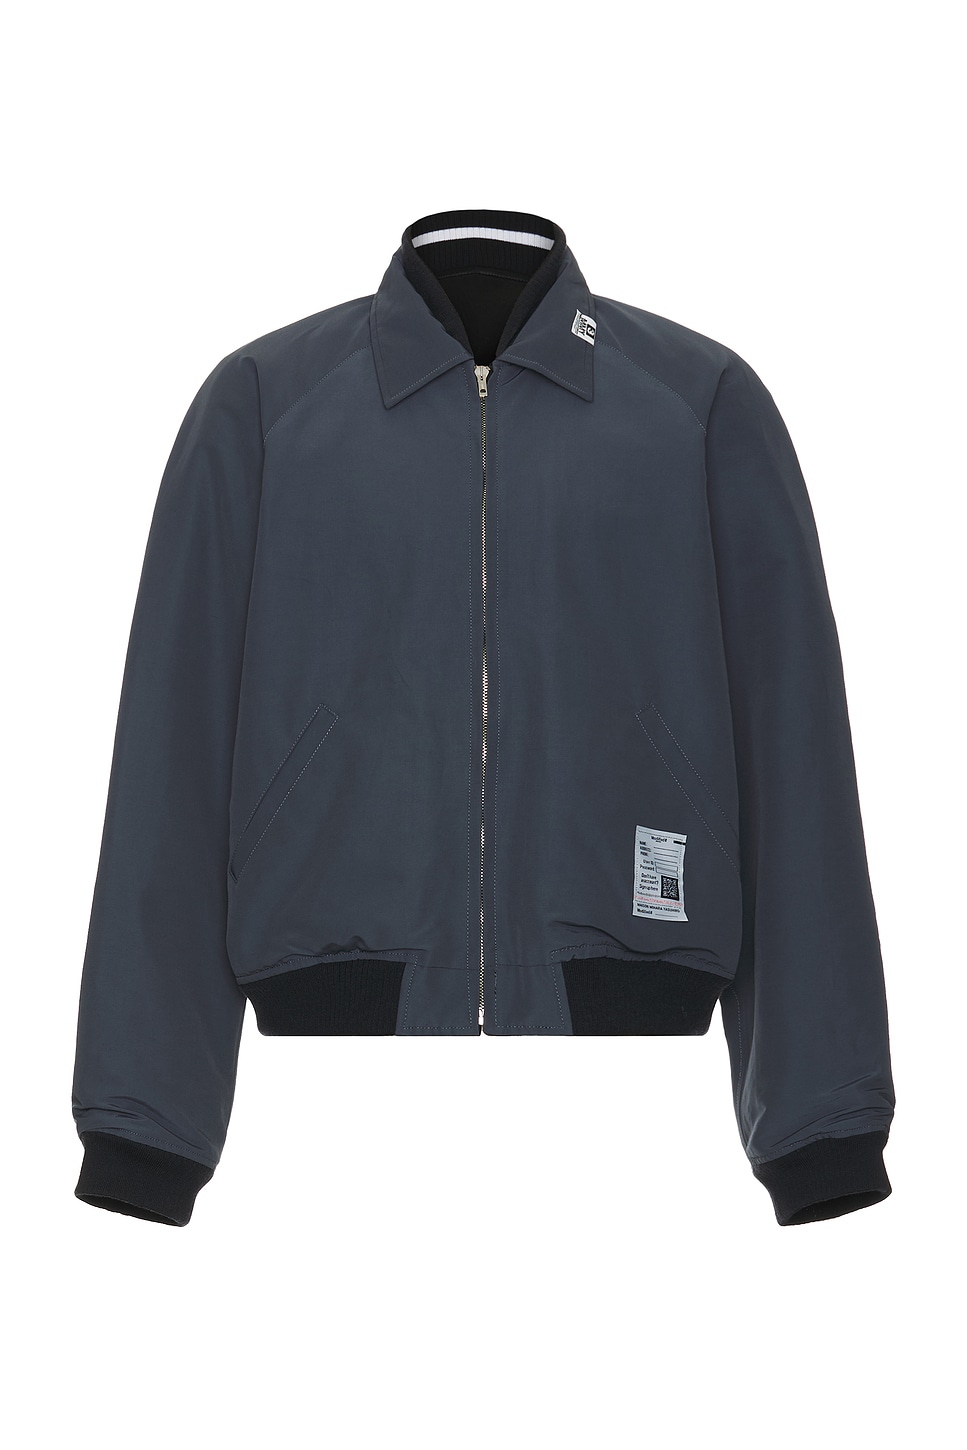 Image 1 of Maison MIHARA YASUHIRO Reversible Souvenir Jacket in Gray